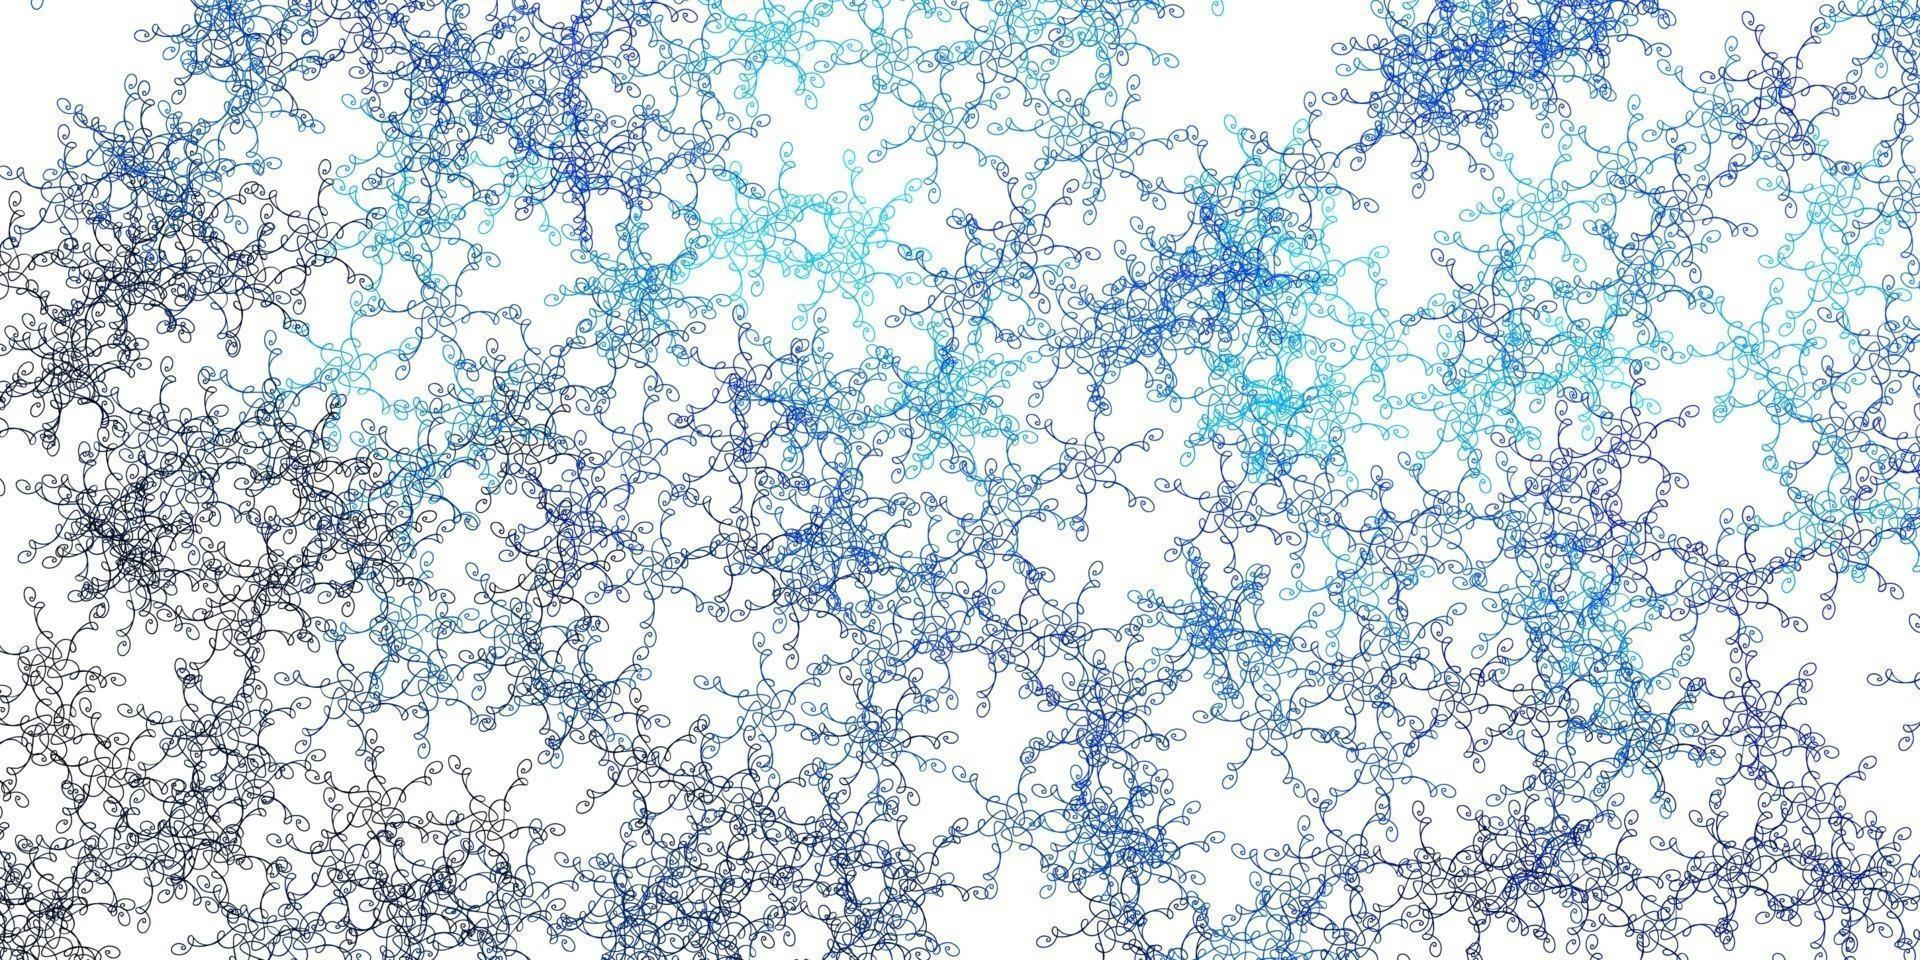 hellblaue Vektorschablone mit gekrümmten Linien. vektor